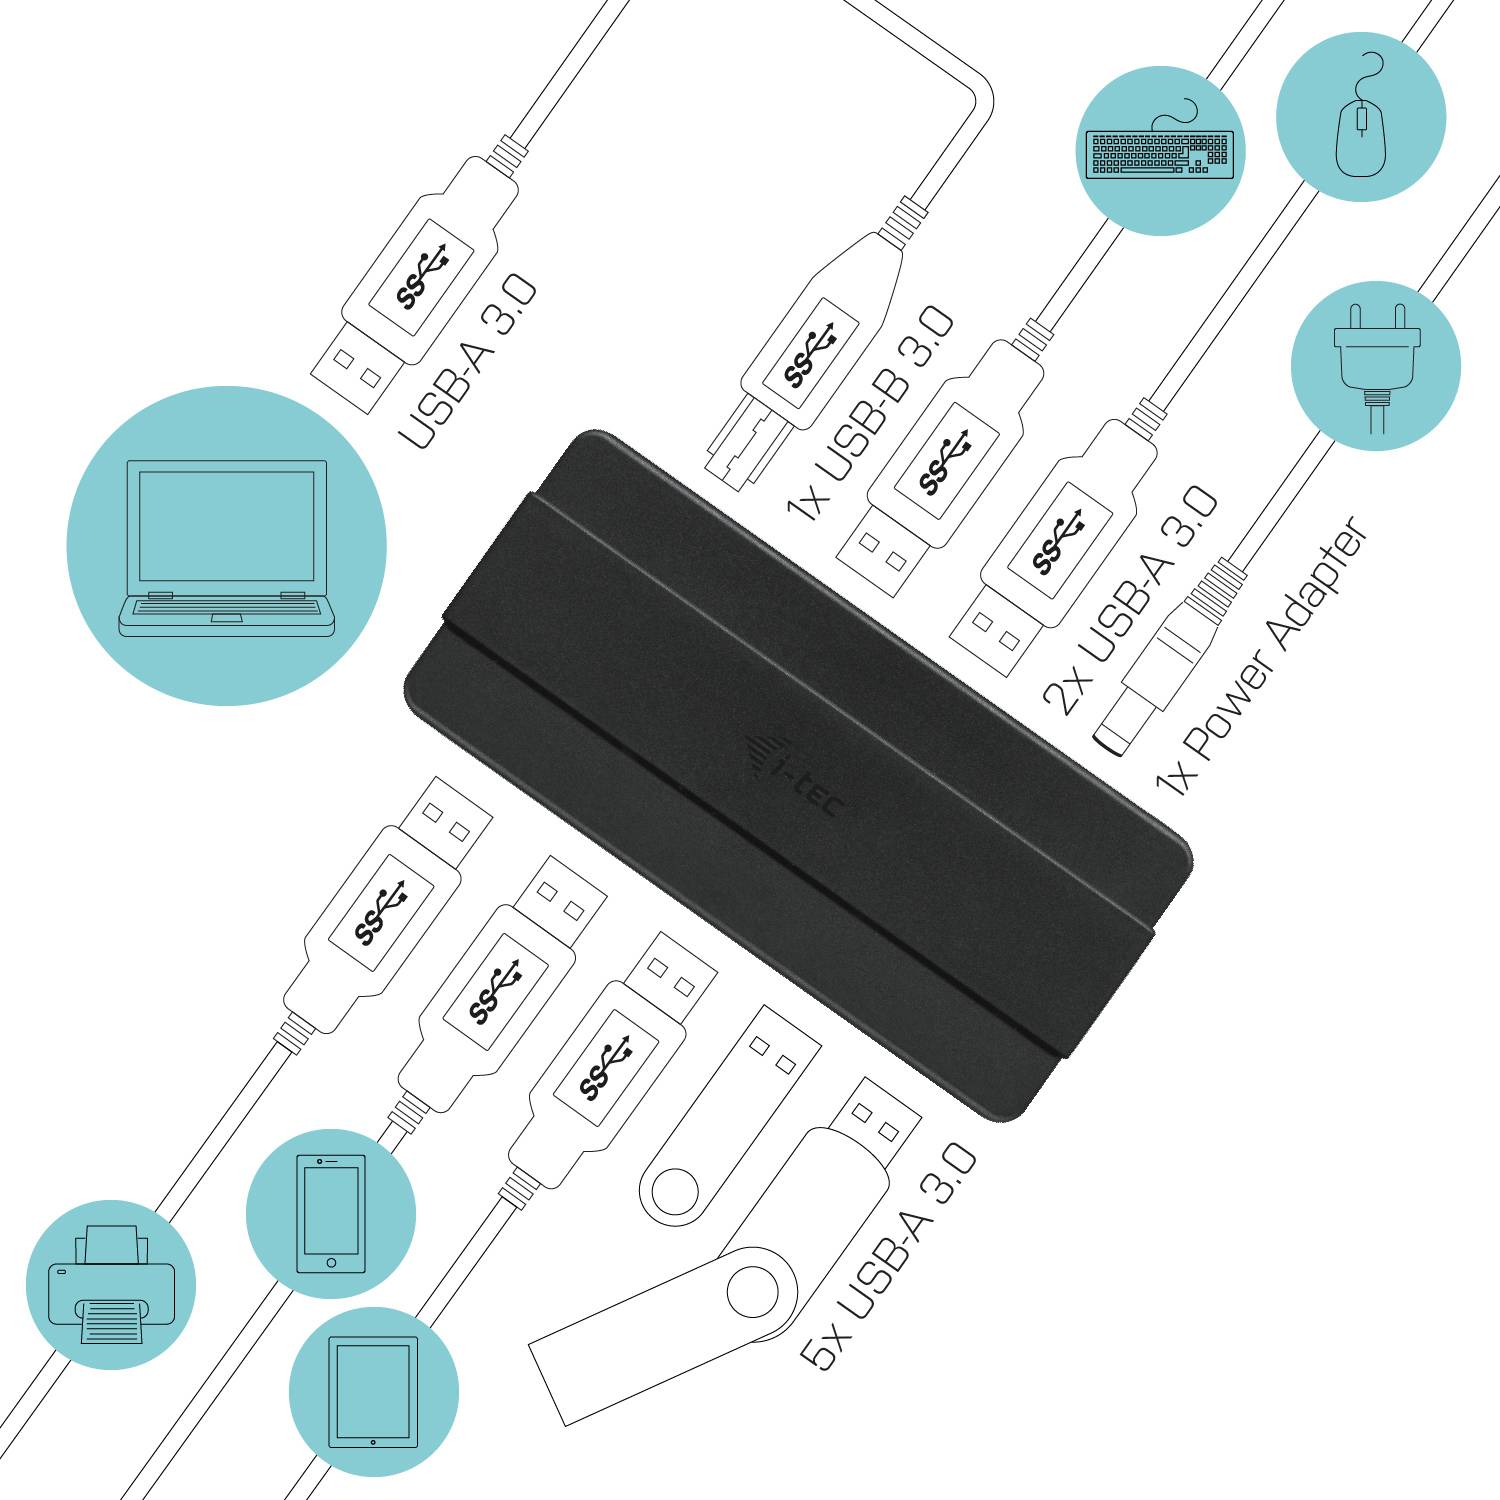 Rca Informatique - image du produit : I-TEC USB 3.0 CHARGING HUB 7 USB 3.0 HUB 7PORT WITH POWER AD.